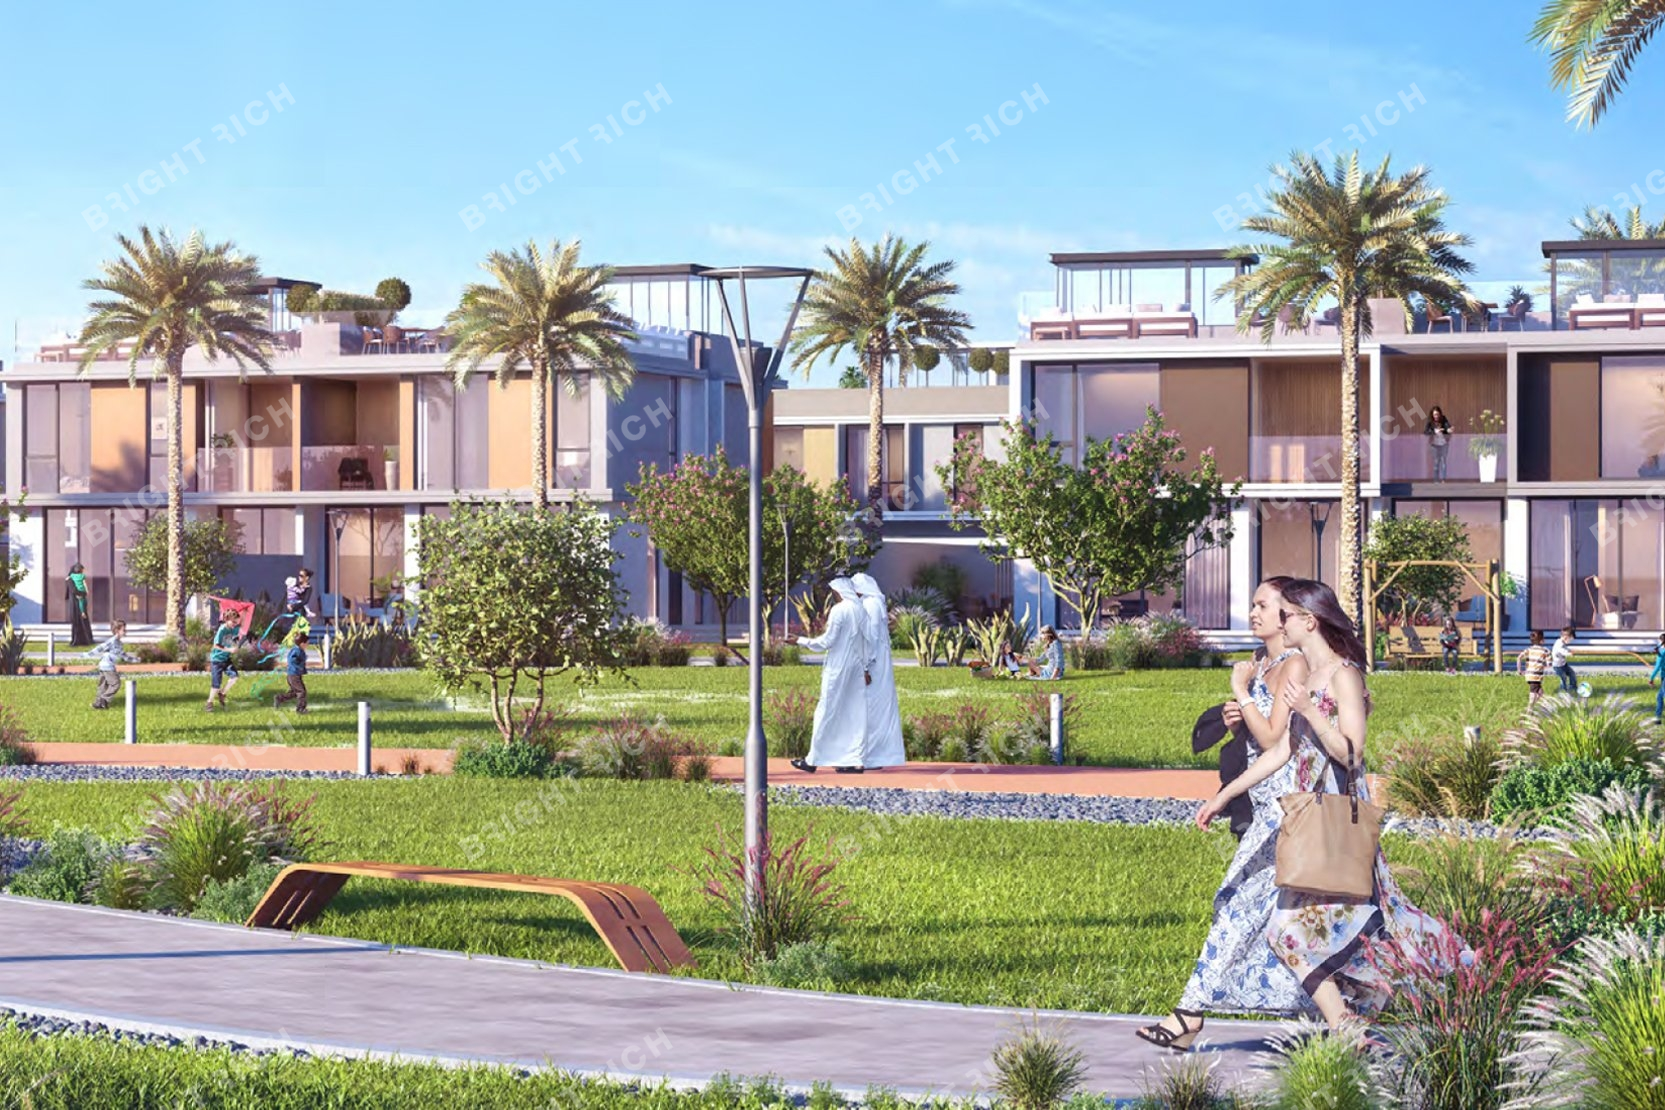 Golf Grove Villas, apart complex in Dubai - 2